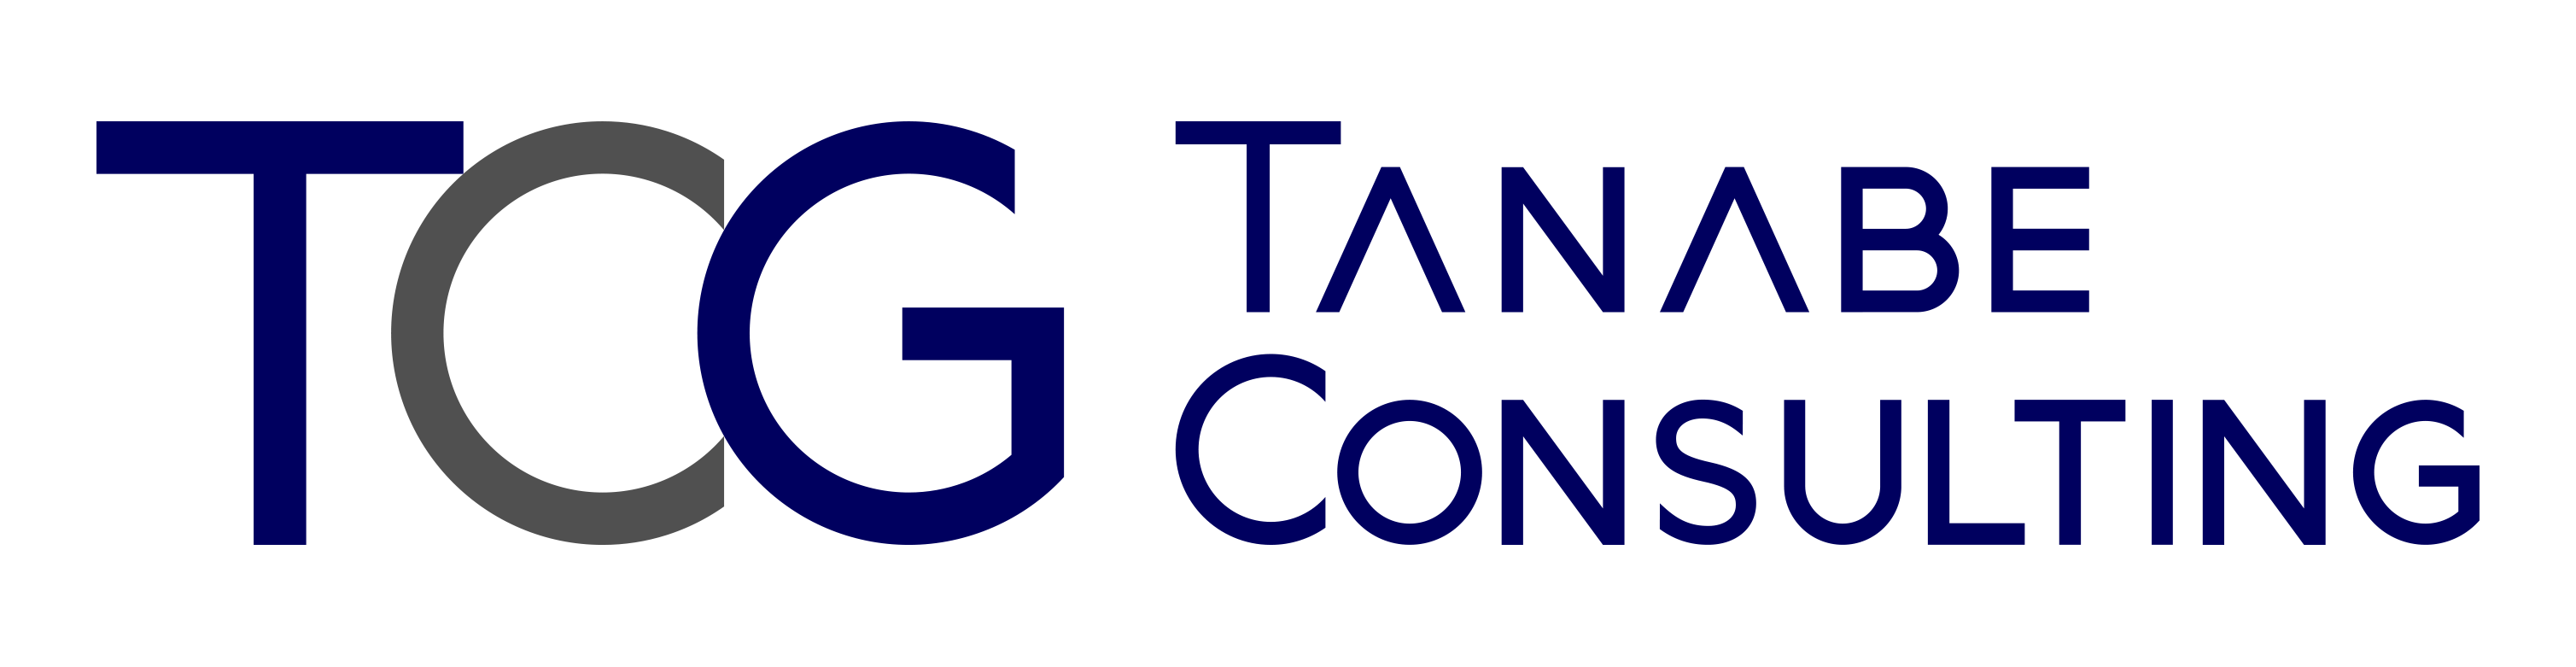 TCG_Logo_3_2021.png